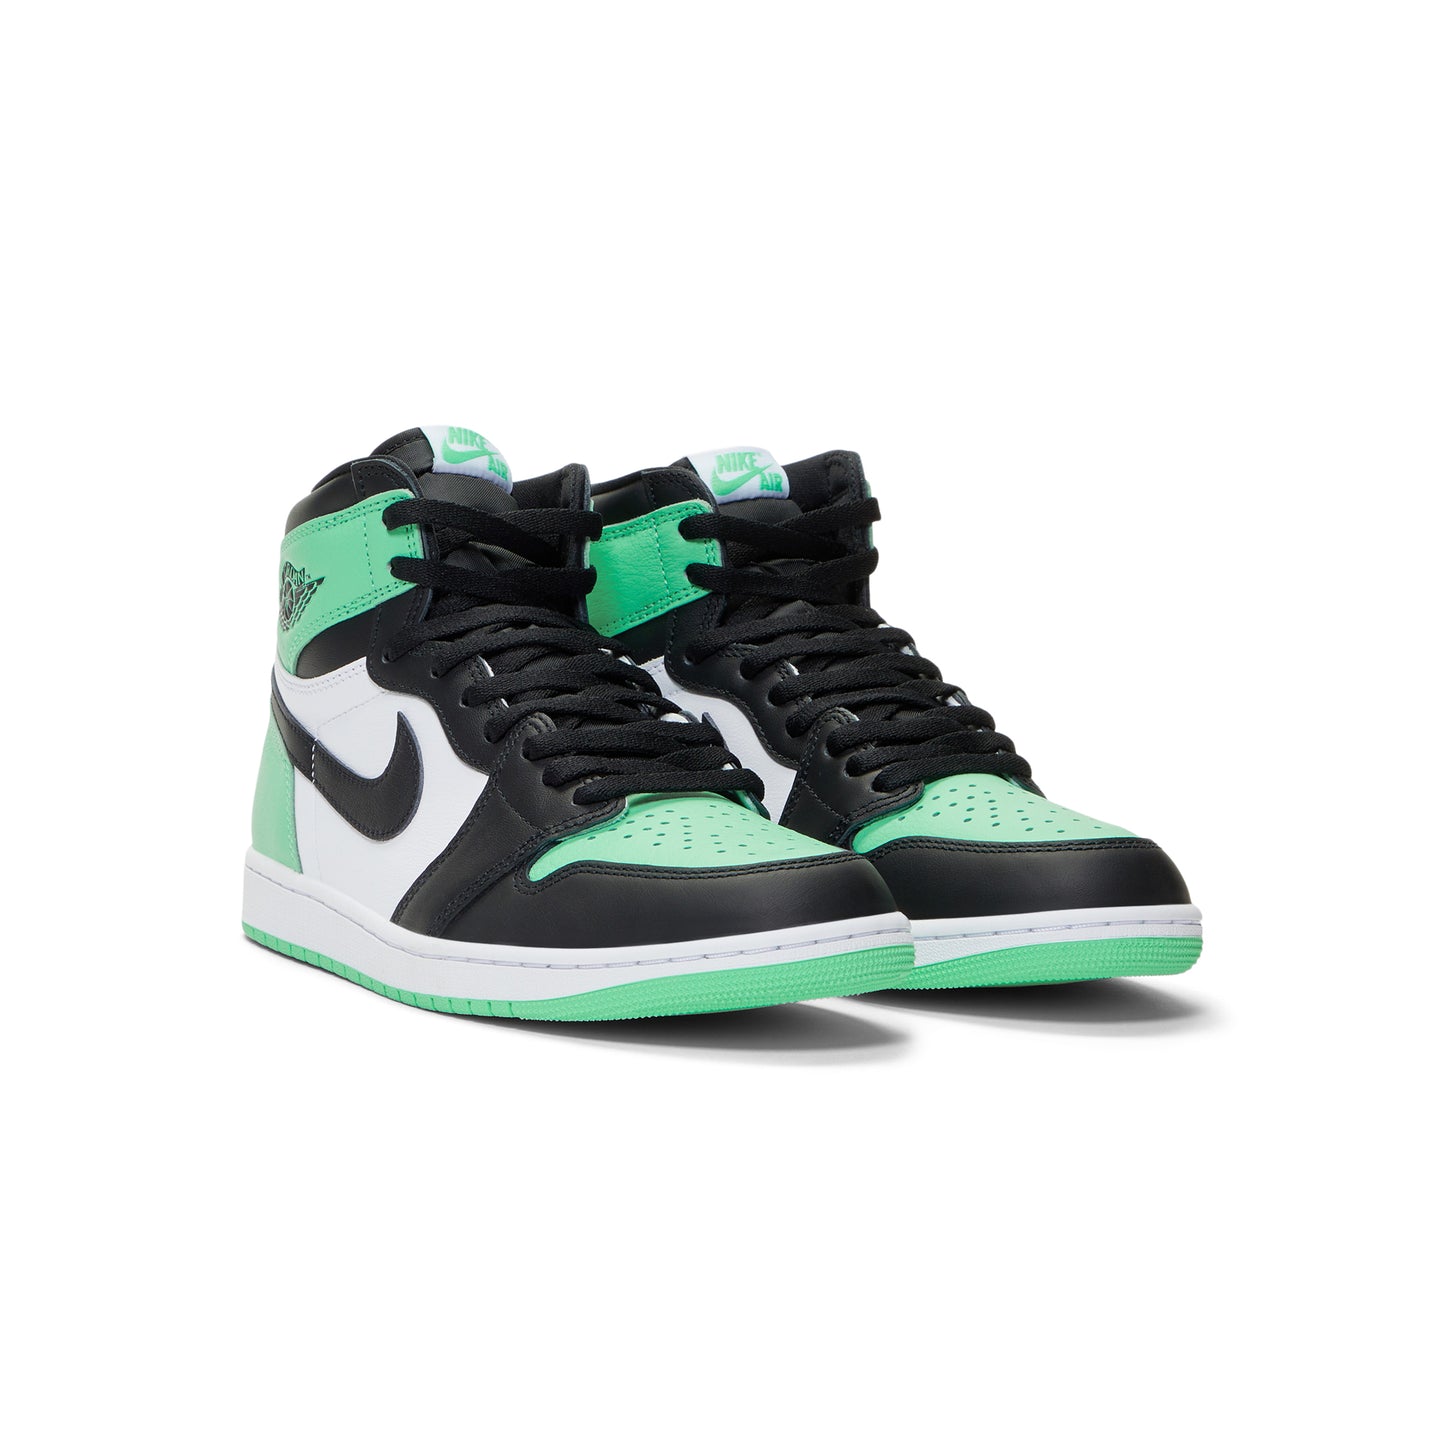 Nike Air Jordan 1 Retro High OG (White/Black/Green Glow)